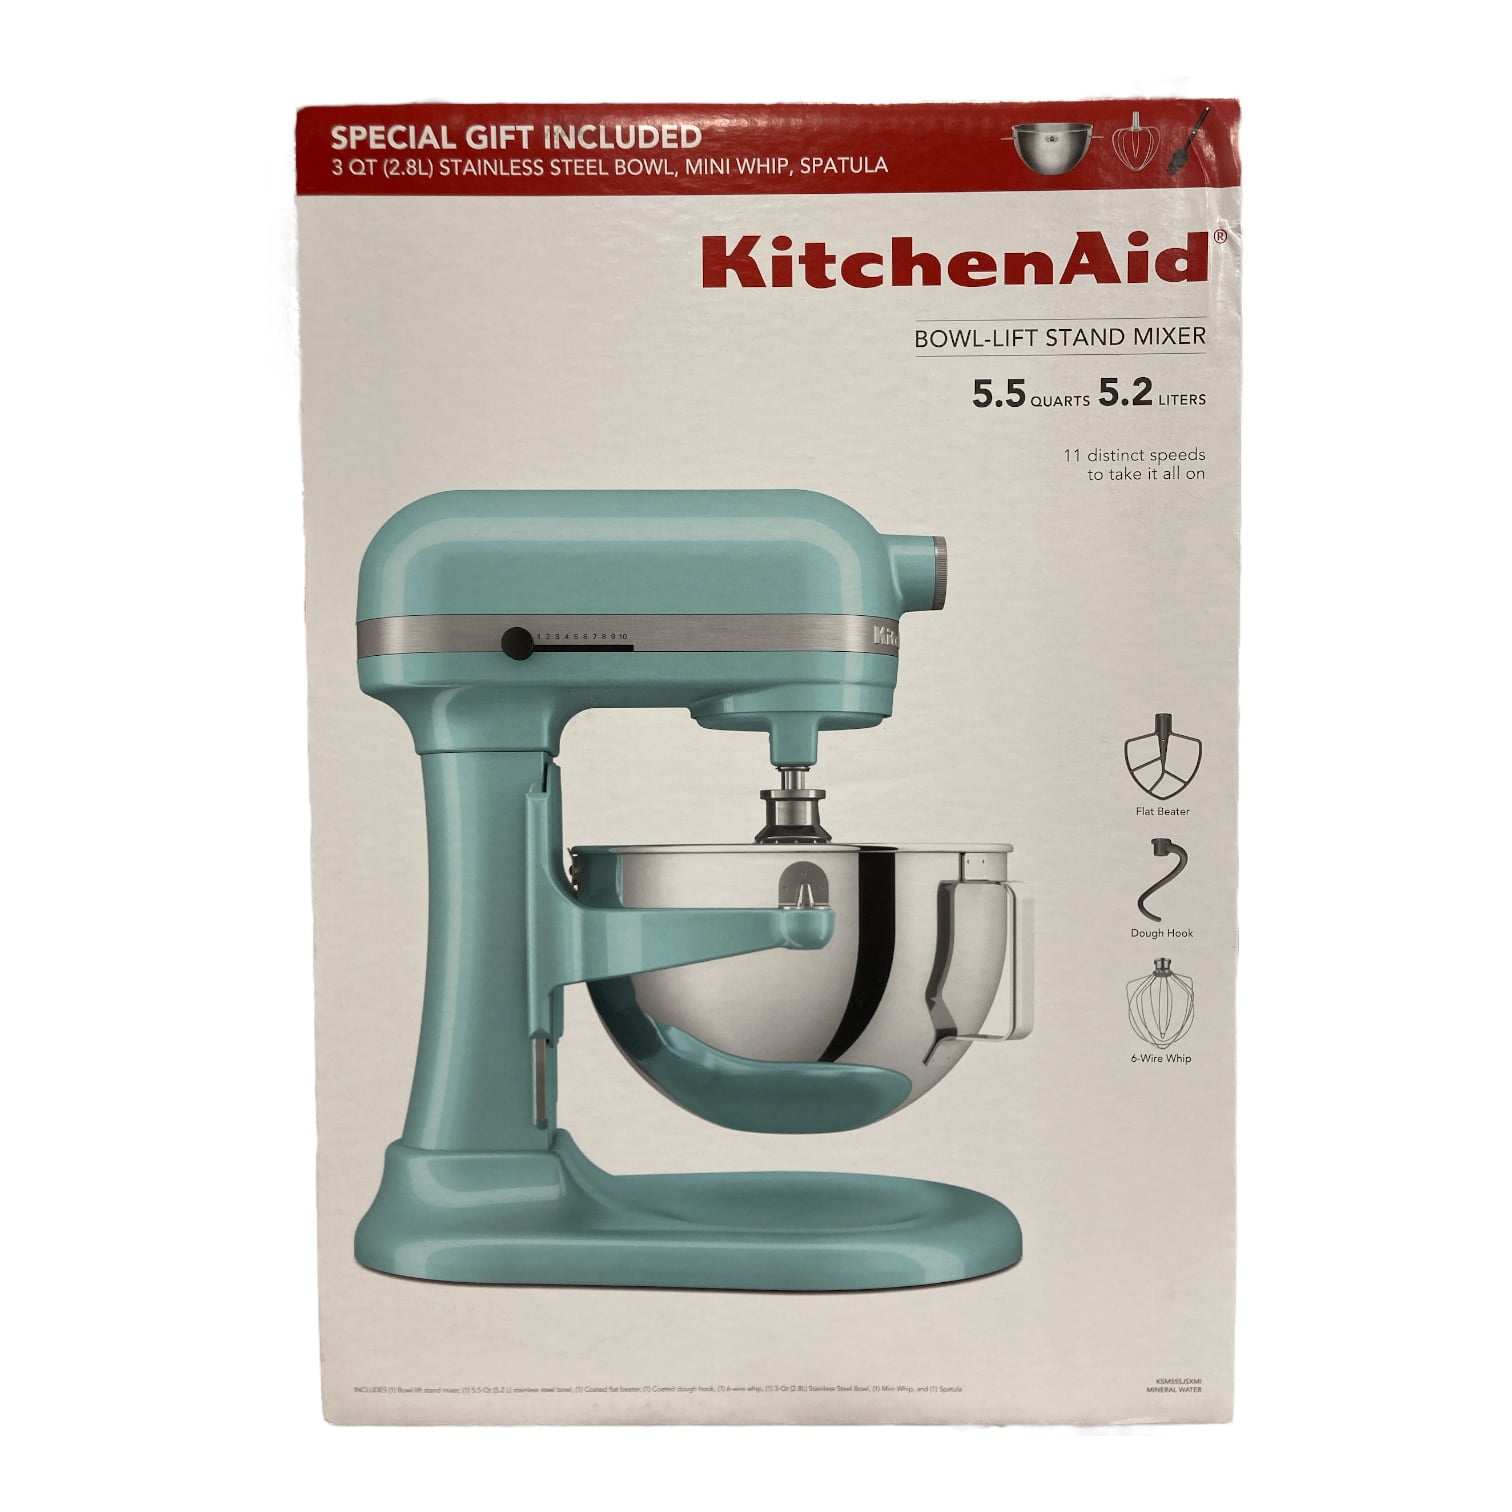 Stainless Steel Dough Hook Attachment for KitchenAid 5 & 6-Quart Bowl-Lift Mixer